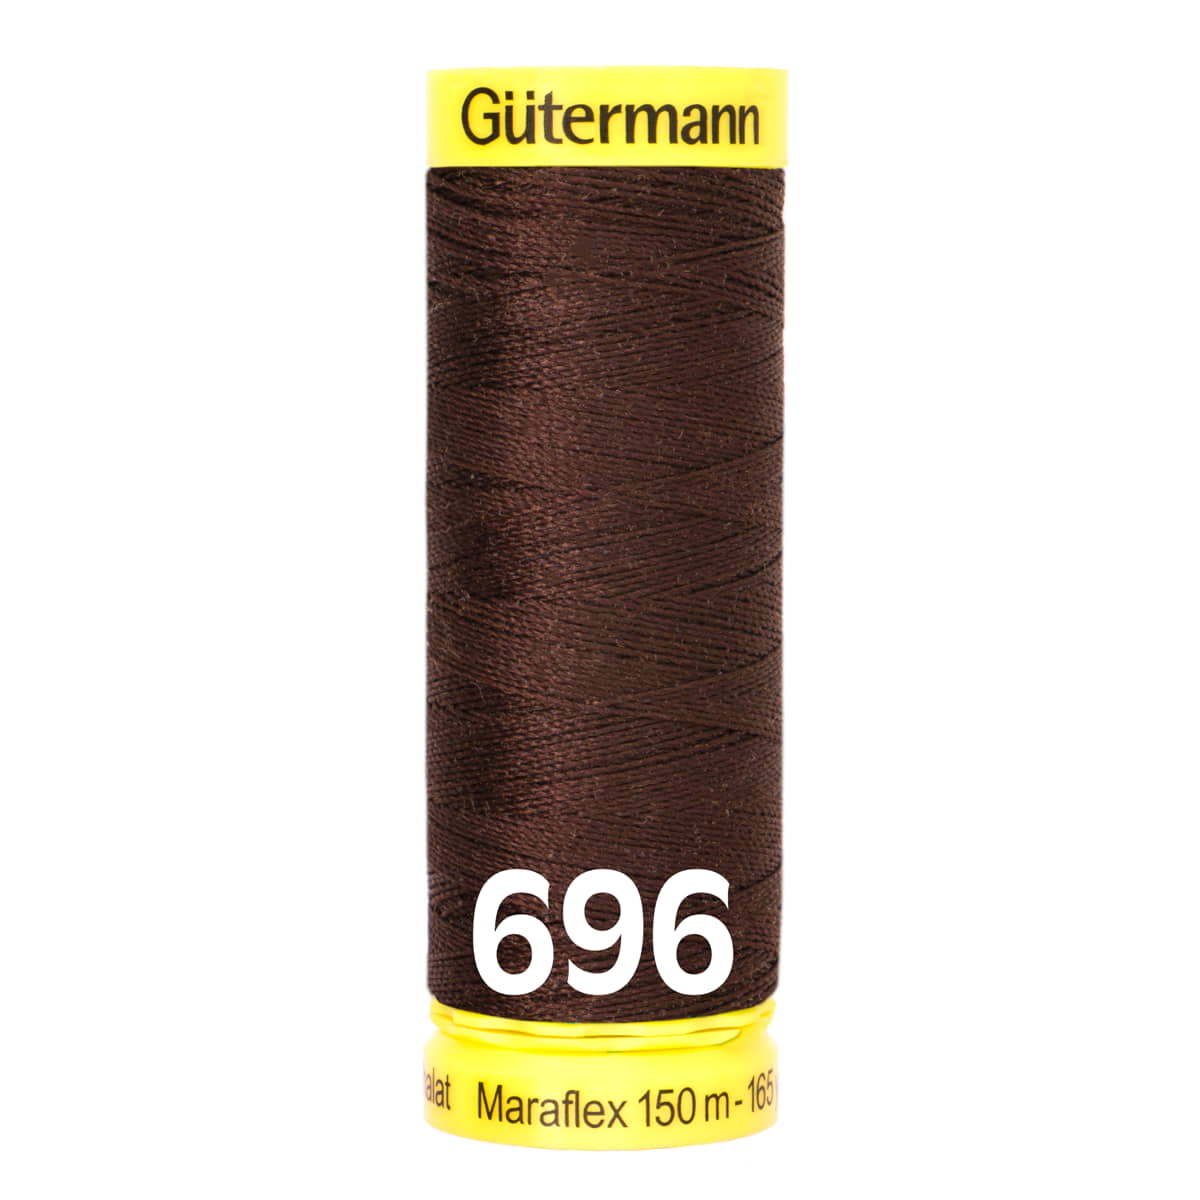 Gütermann MaraFlex 150m - 696 donker bruin GUTERMANN-MARAFLEX-150-696 4029394998478 - Fourniturenkraam.nl